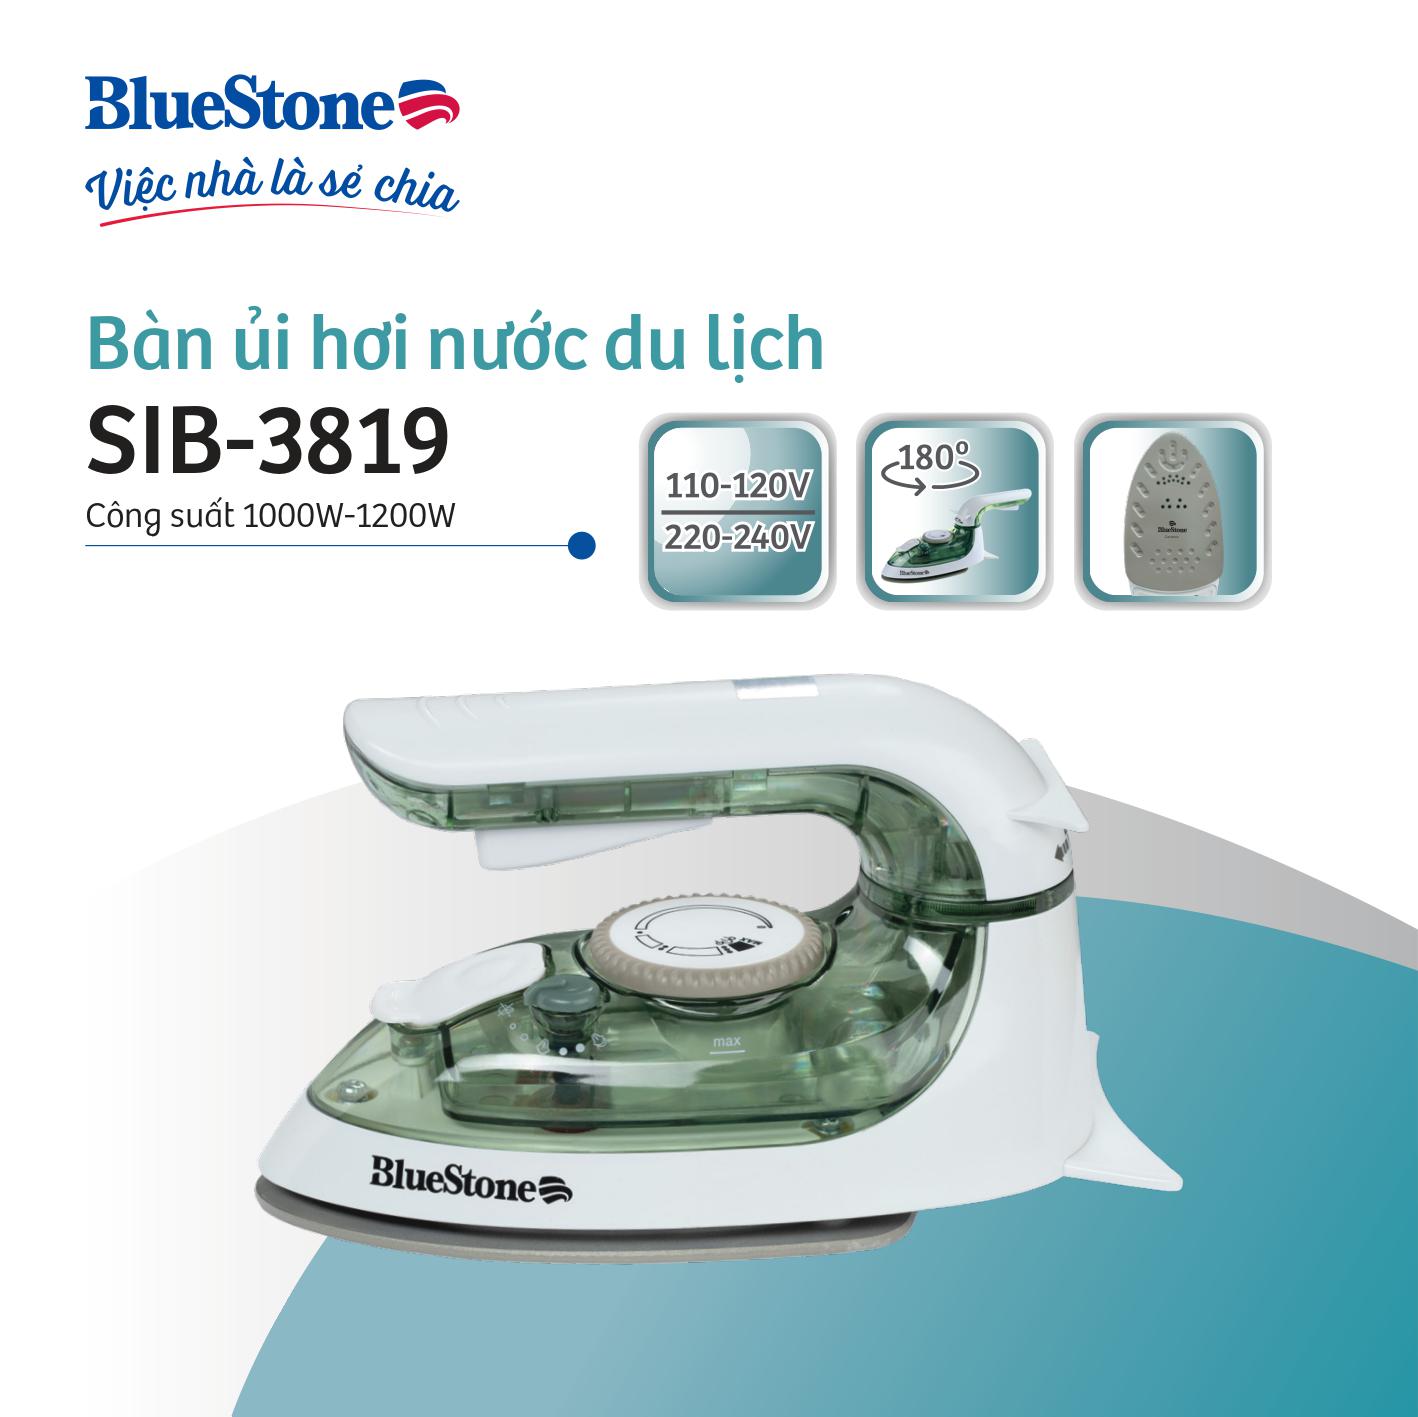 Bàn ủi hơi nước du lịch mini BlueStone SIB-3819